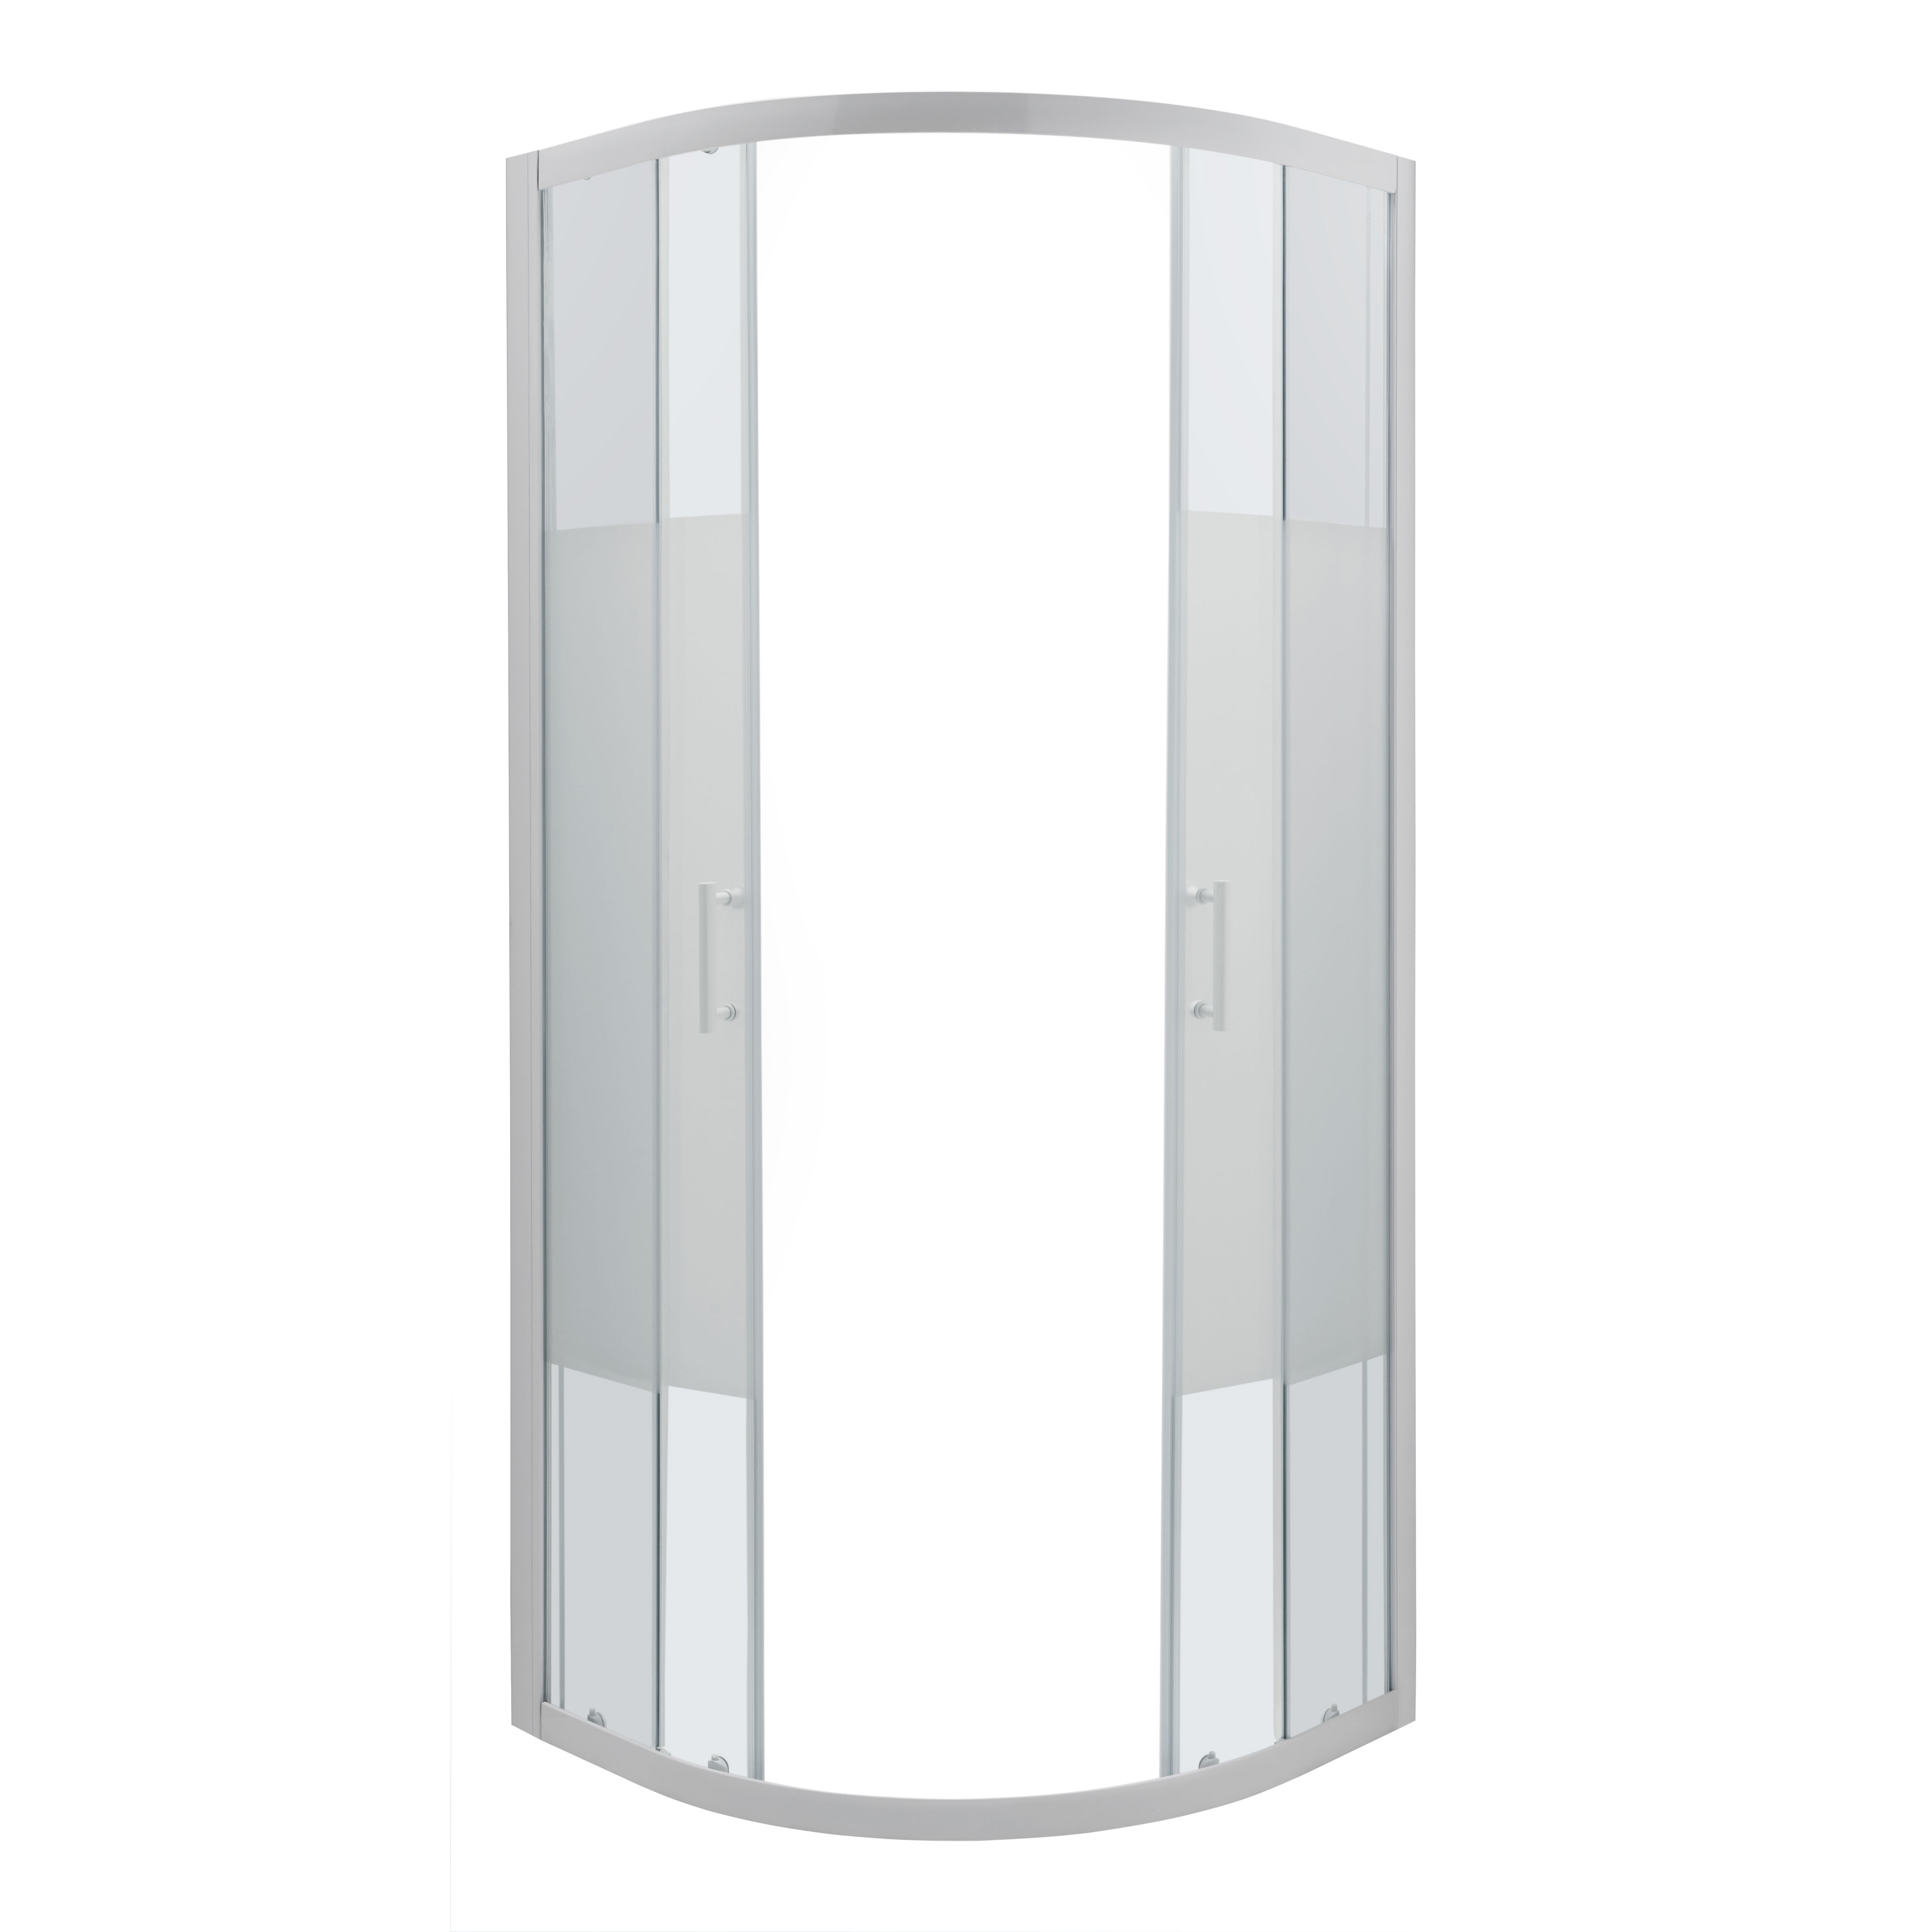 GoodHome Onega White Quadrant Shower Enclosure & tray with Corner entry double sliding door (H)190cm (W)90cm (D)90cm